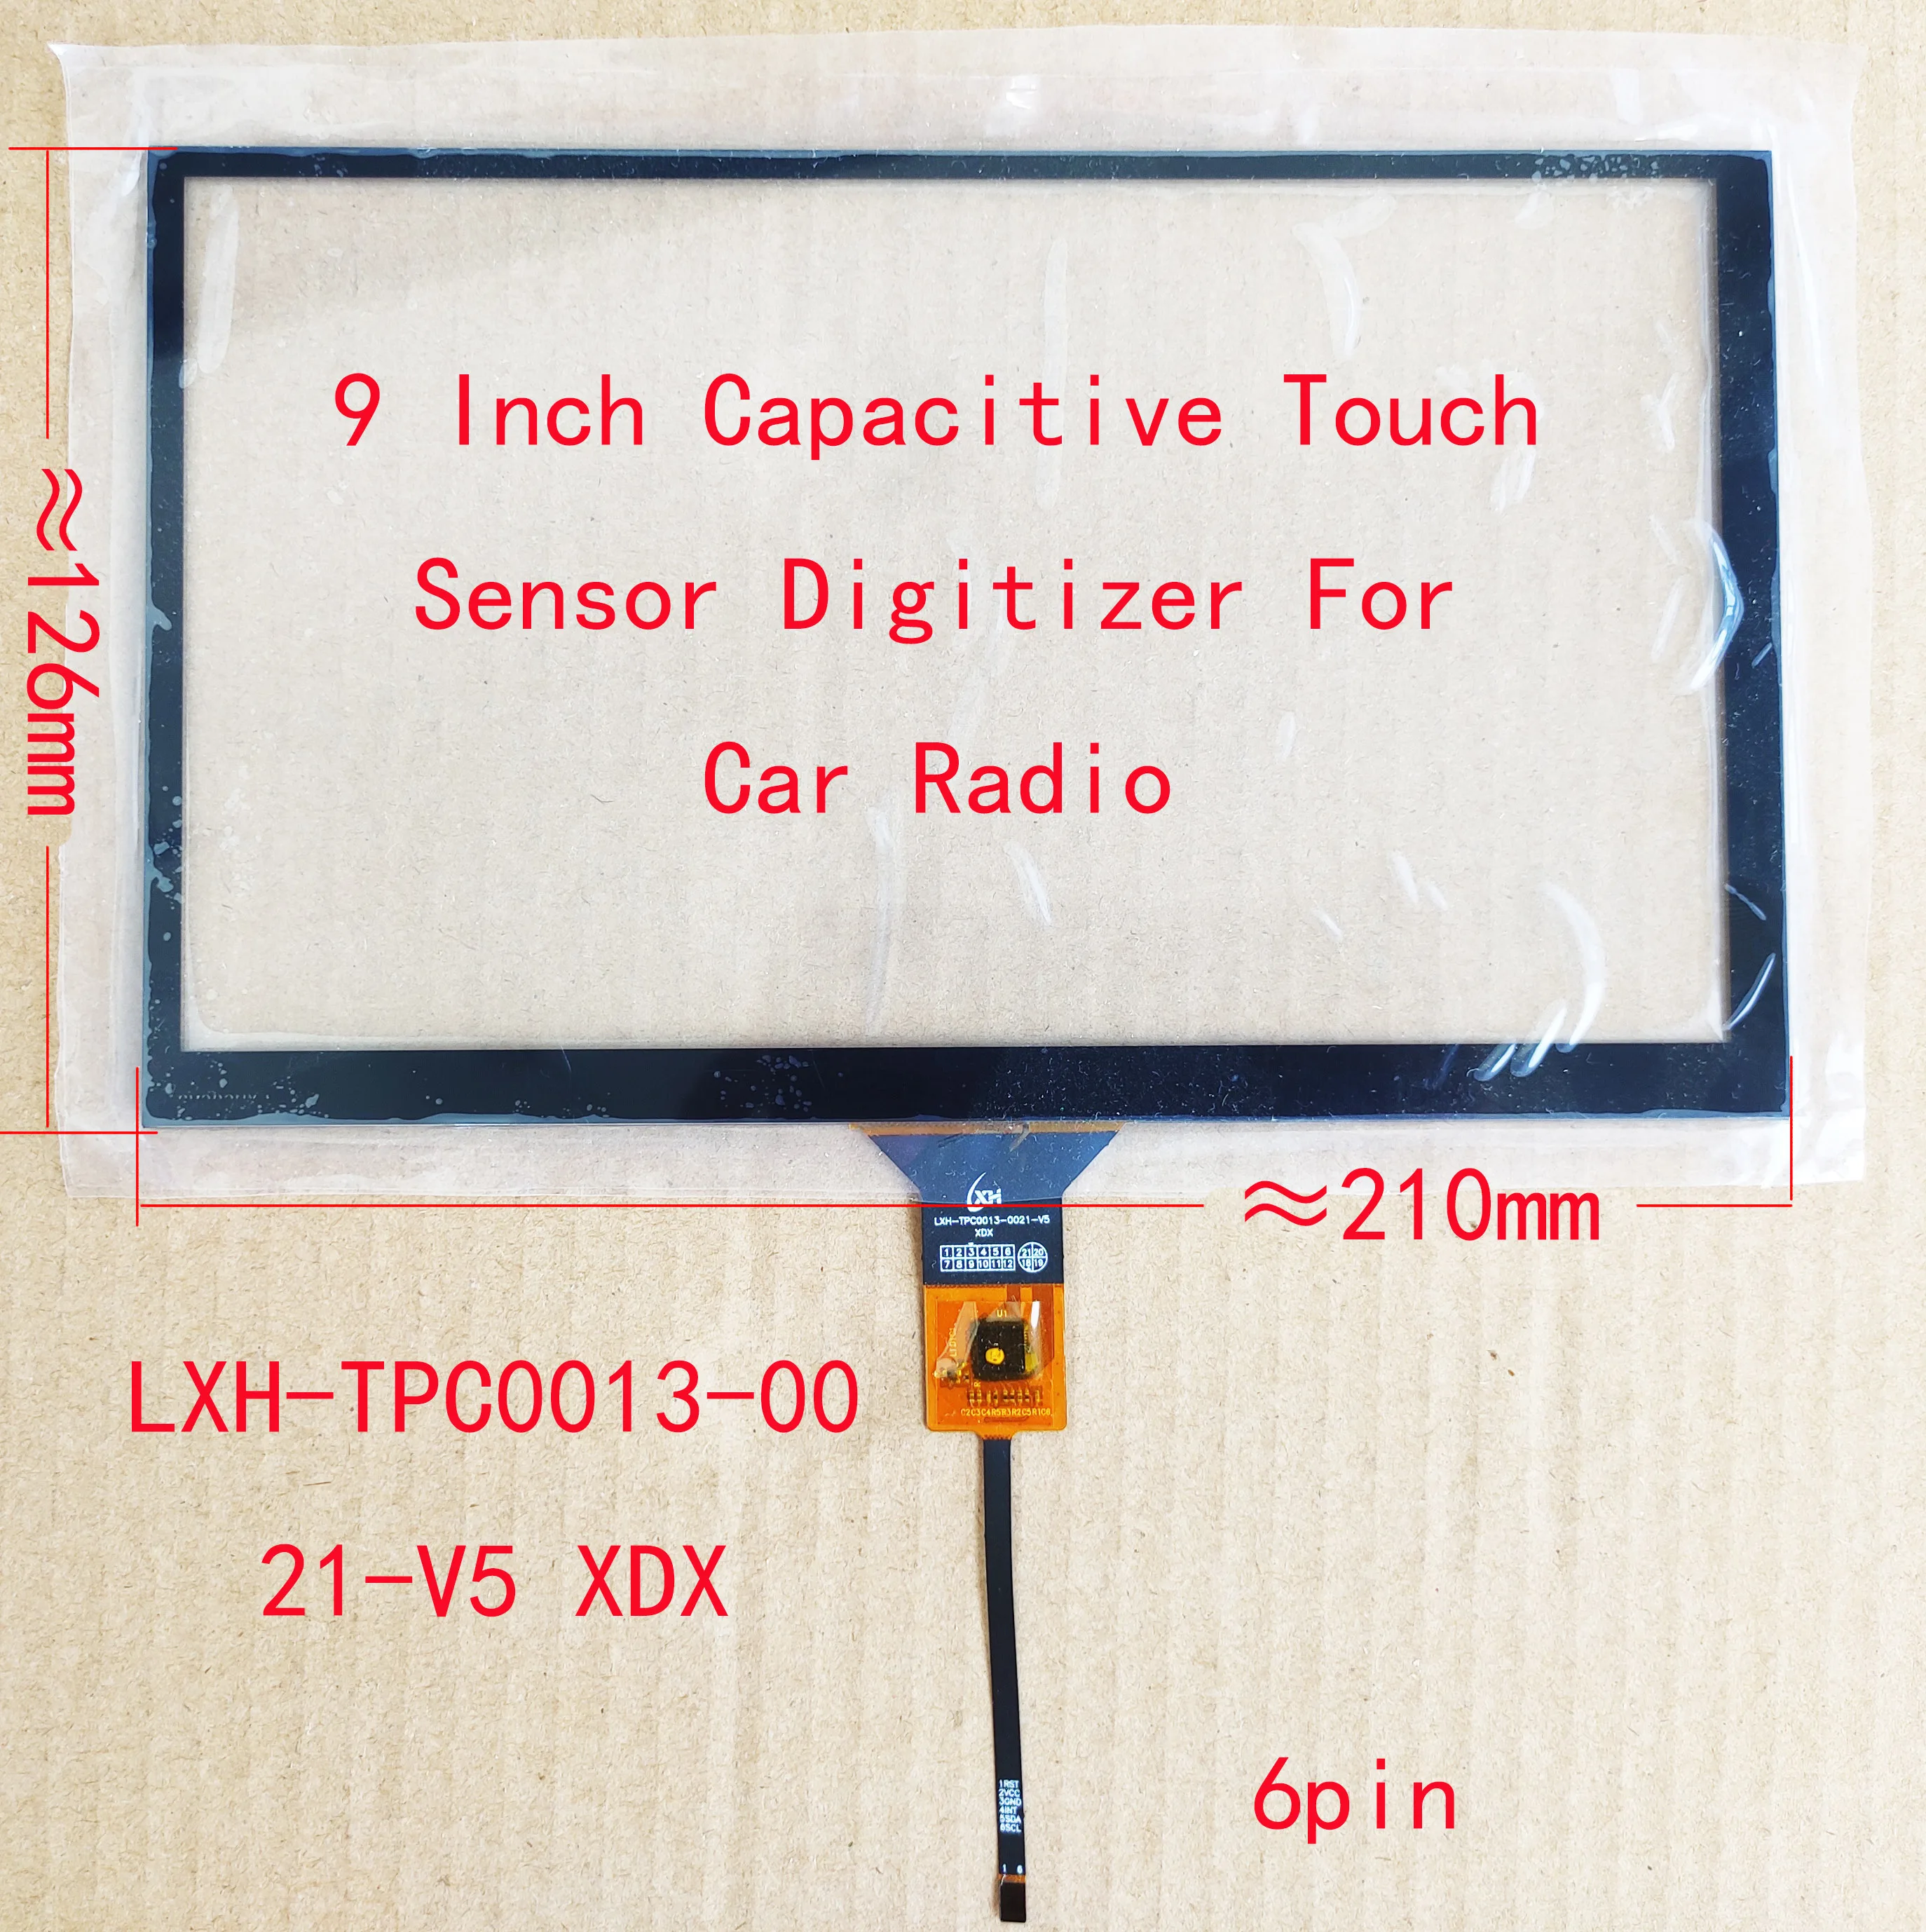 Panel de cristal con Sensor de pantalla táctil para coche, digitalizador capacitivo de 9 pulgadas, para Radio, GT911, GT615, LXH-TPC0013-0021-V5 de 6 pines